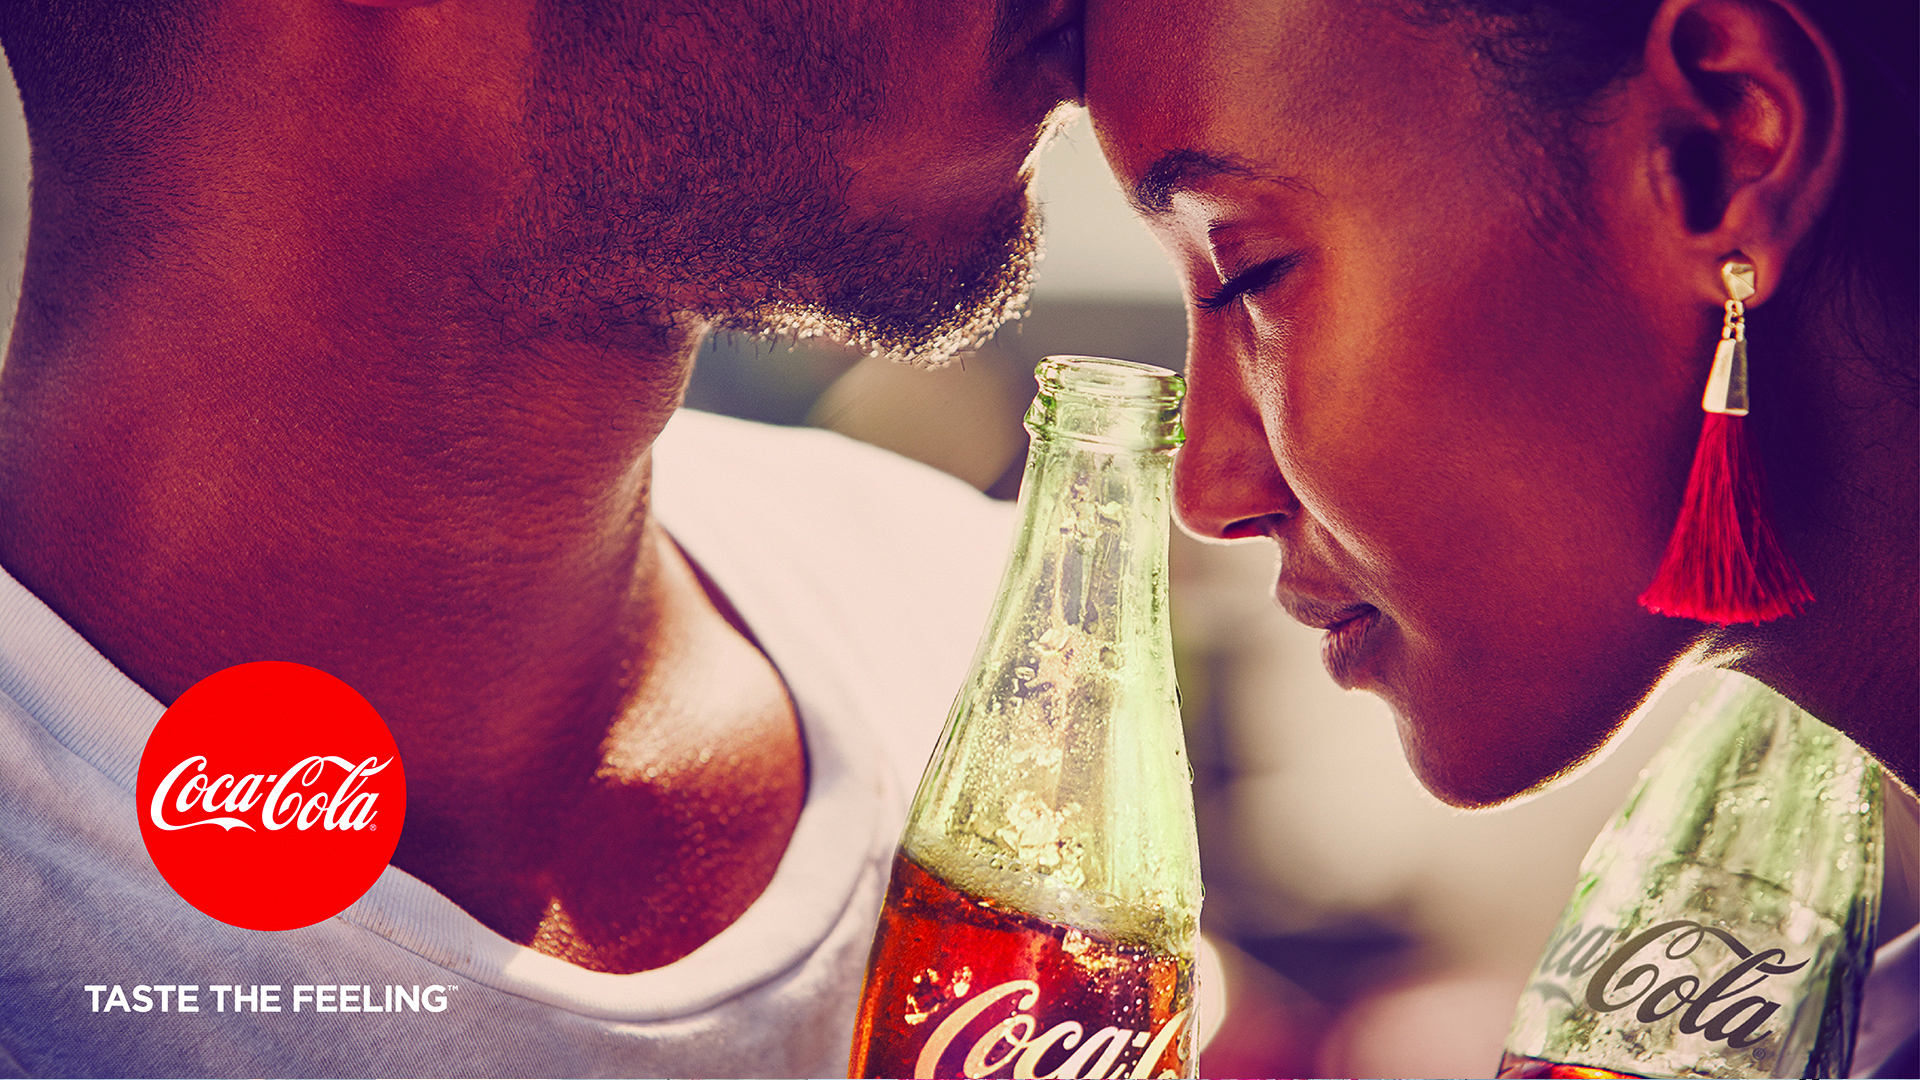 Taste the feeling. Реклама колы. Кока кола реклама. Современная реклама Кока колы. Кока кола современная реклама.